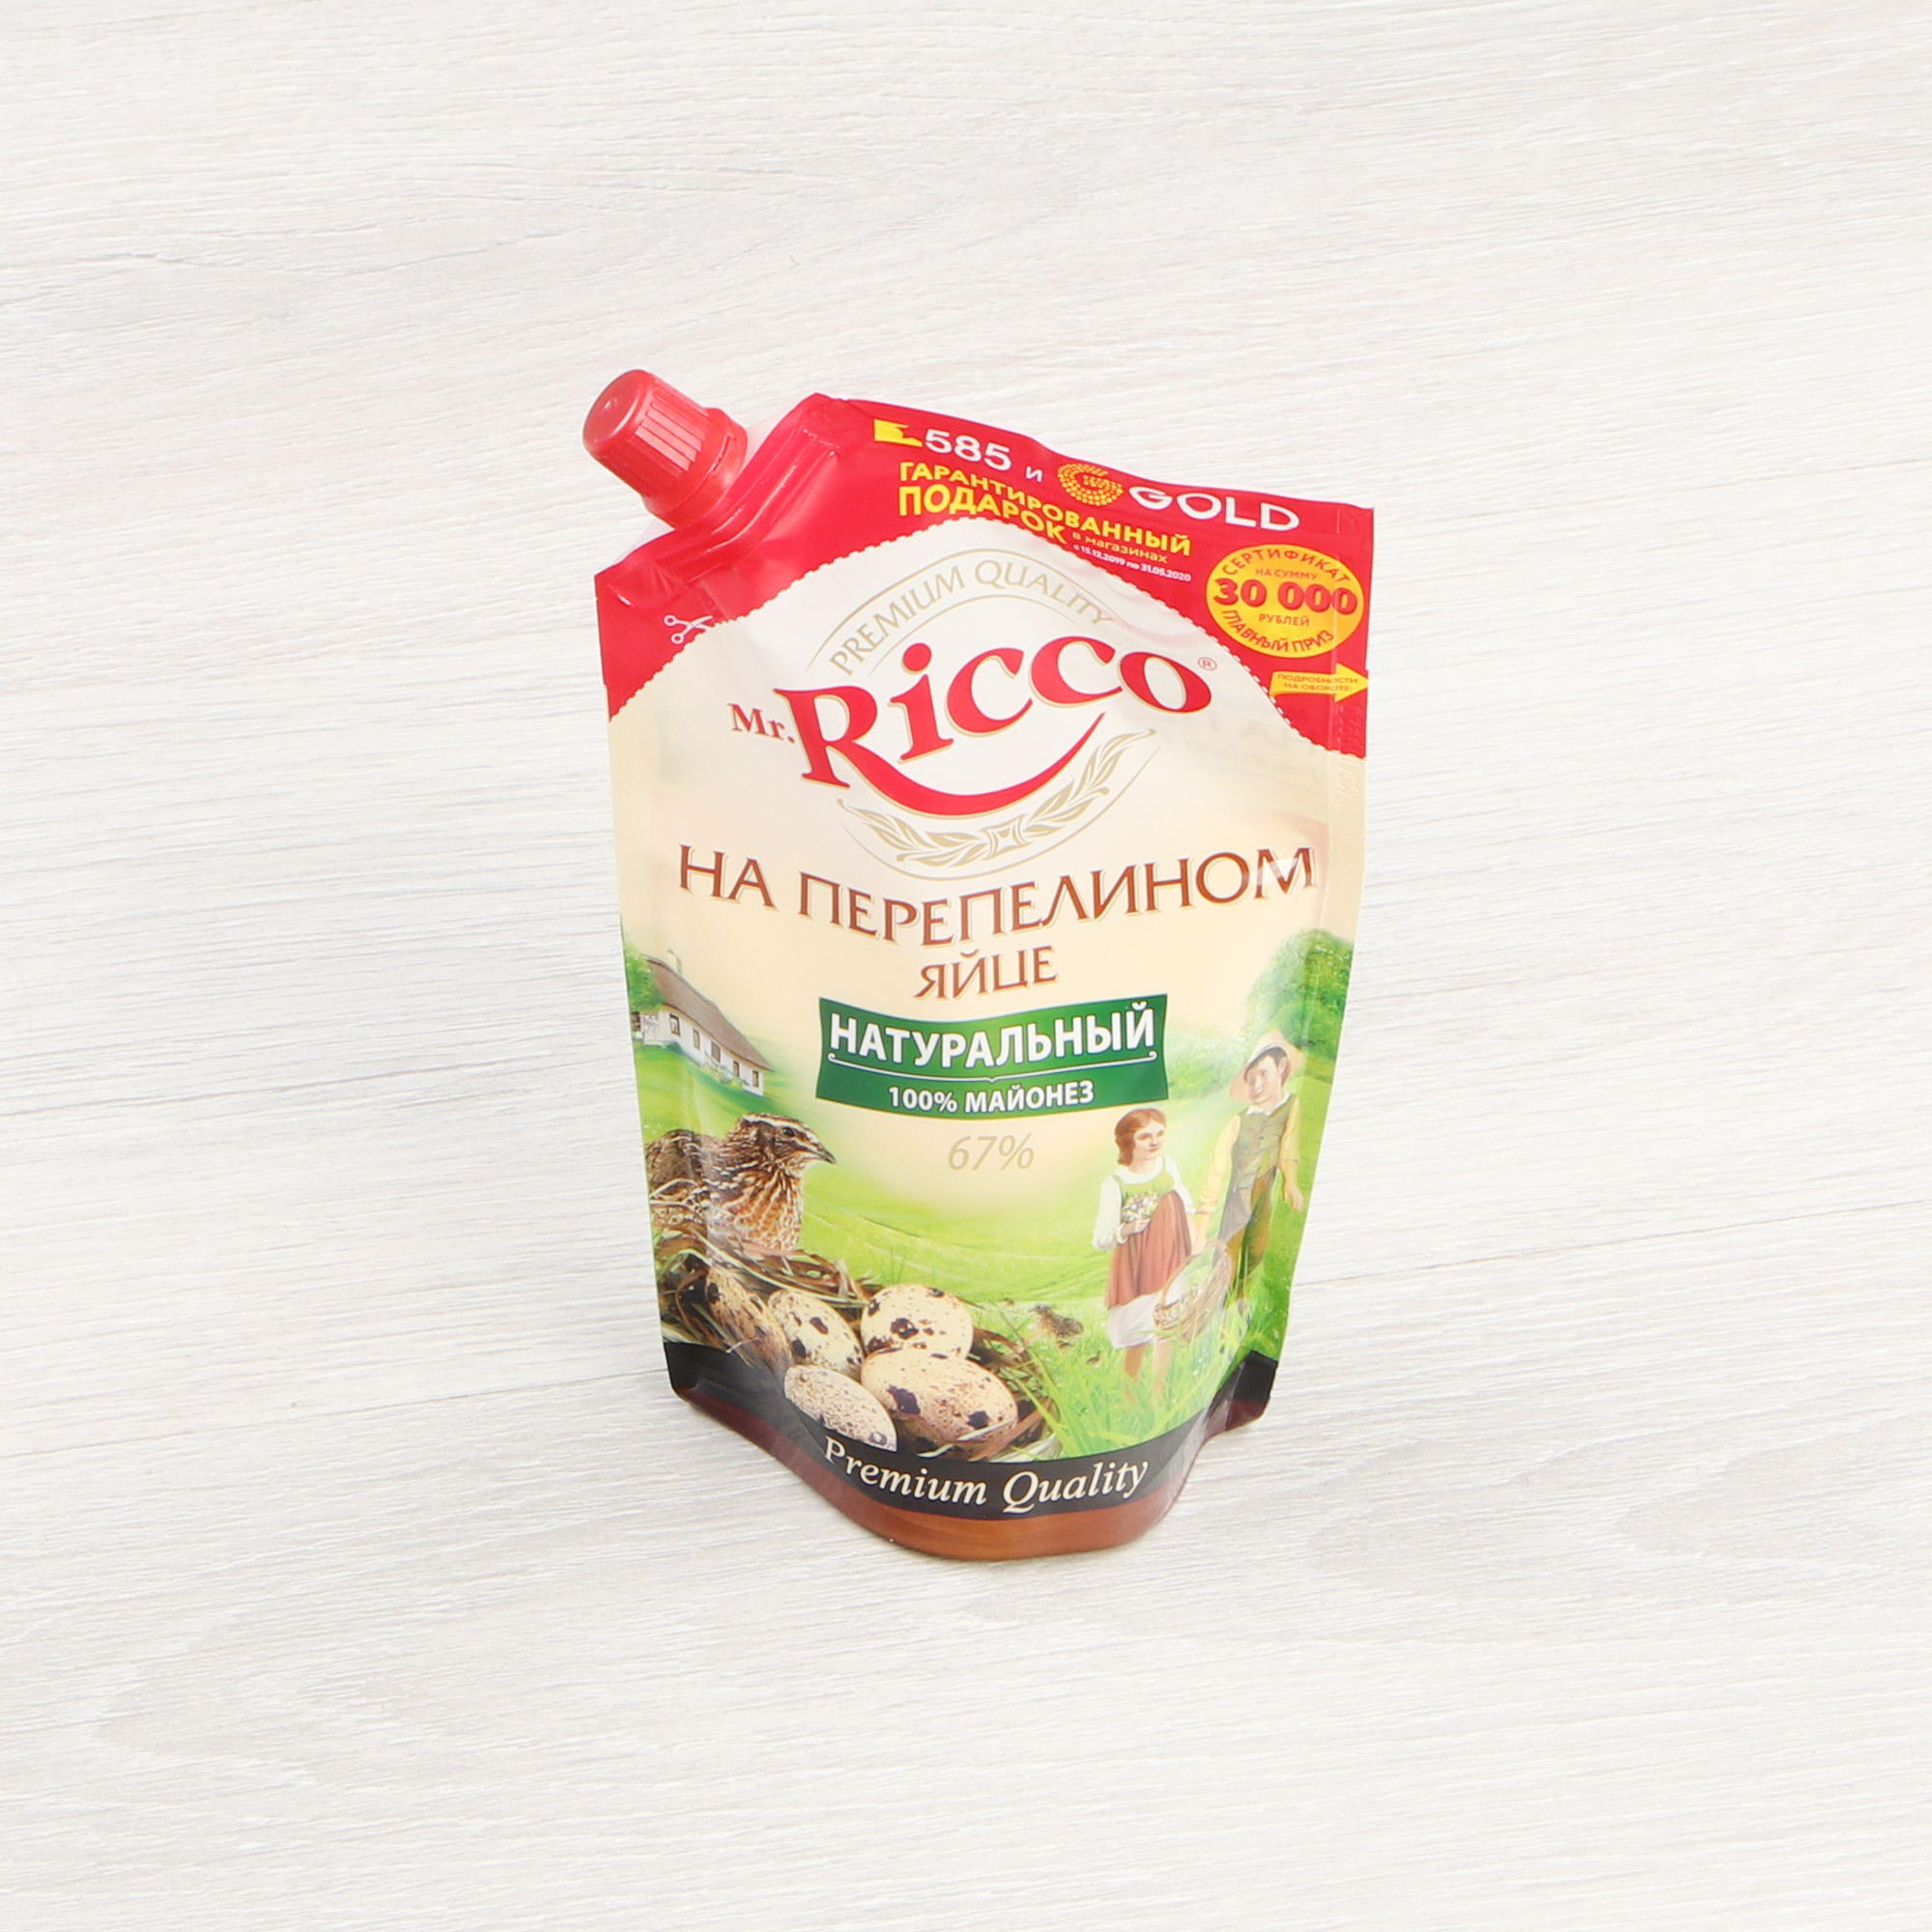 Майонез Mr.Ricco Organic перепелиное яйцо 67% 400 мл майонез слобода стрелецкий с перцем чили 67% 400 мл